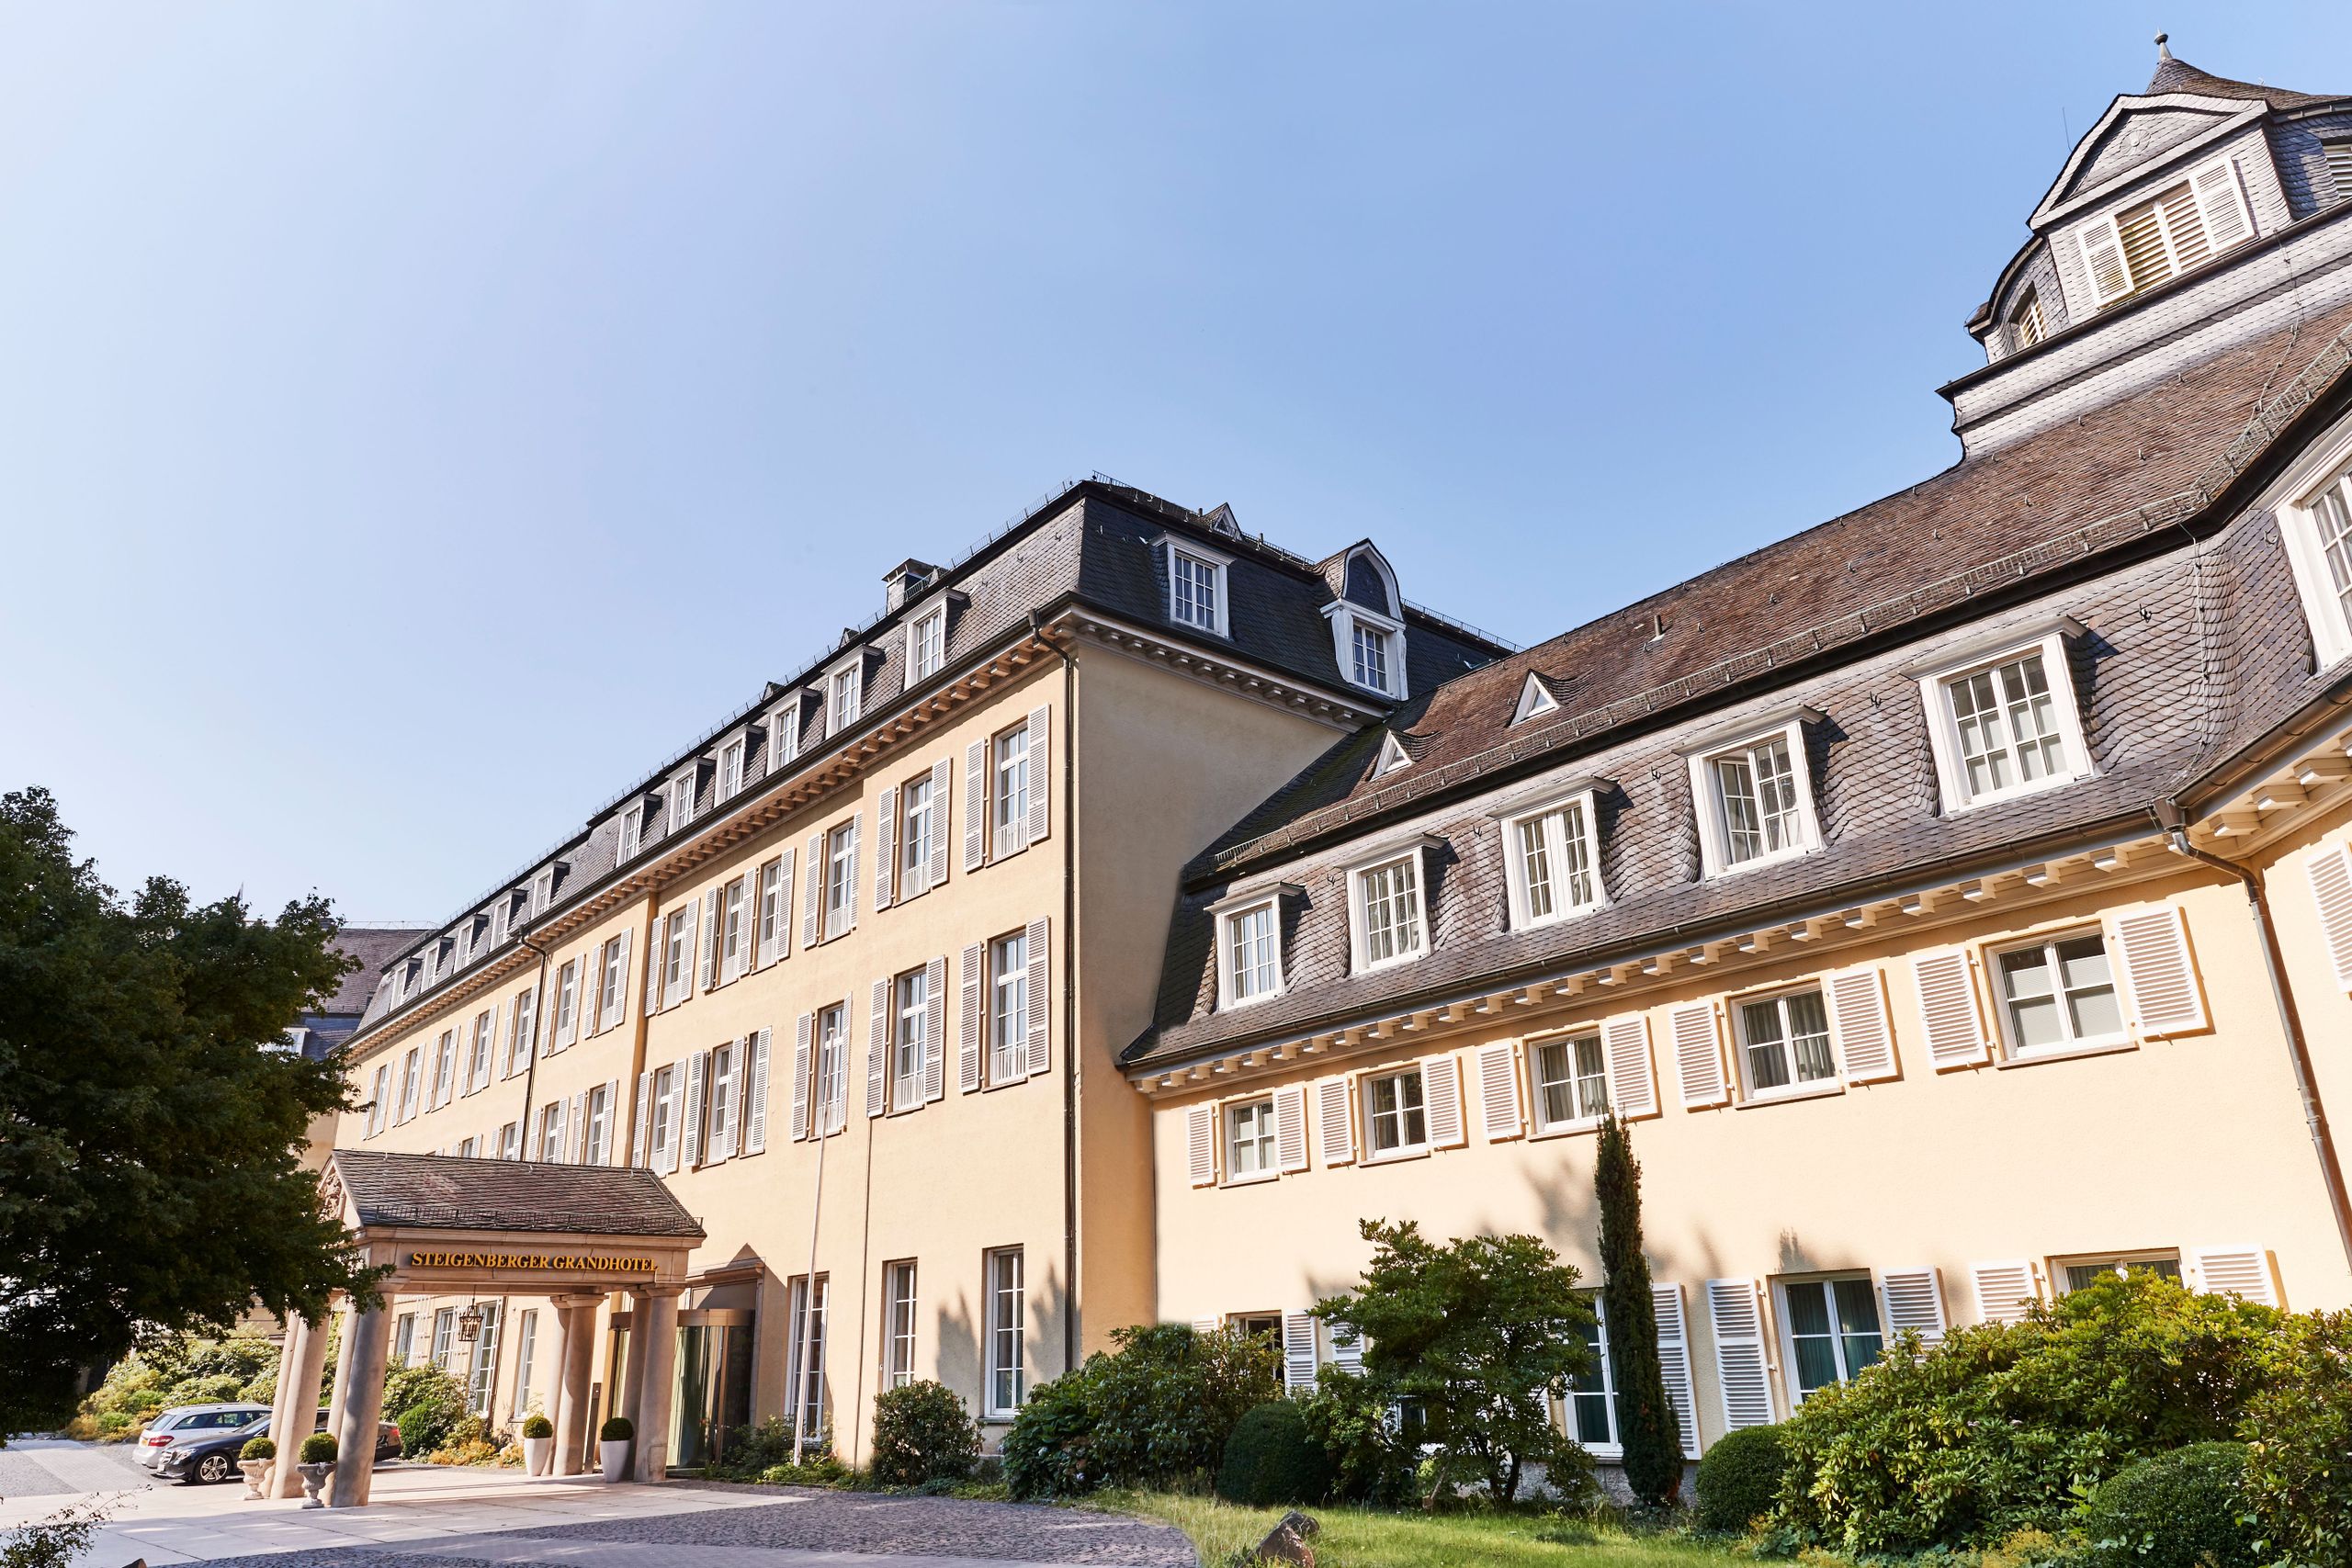 Steigenberger Grandhotel & SPA Petersberg - Königswinter/Bonn - Utvändig vy